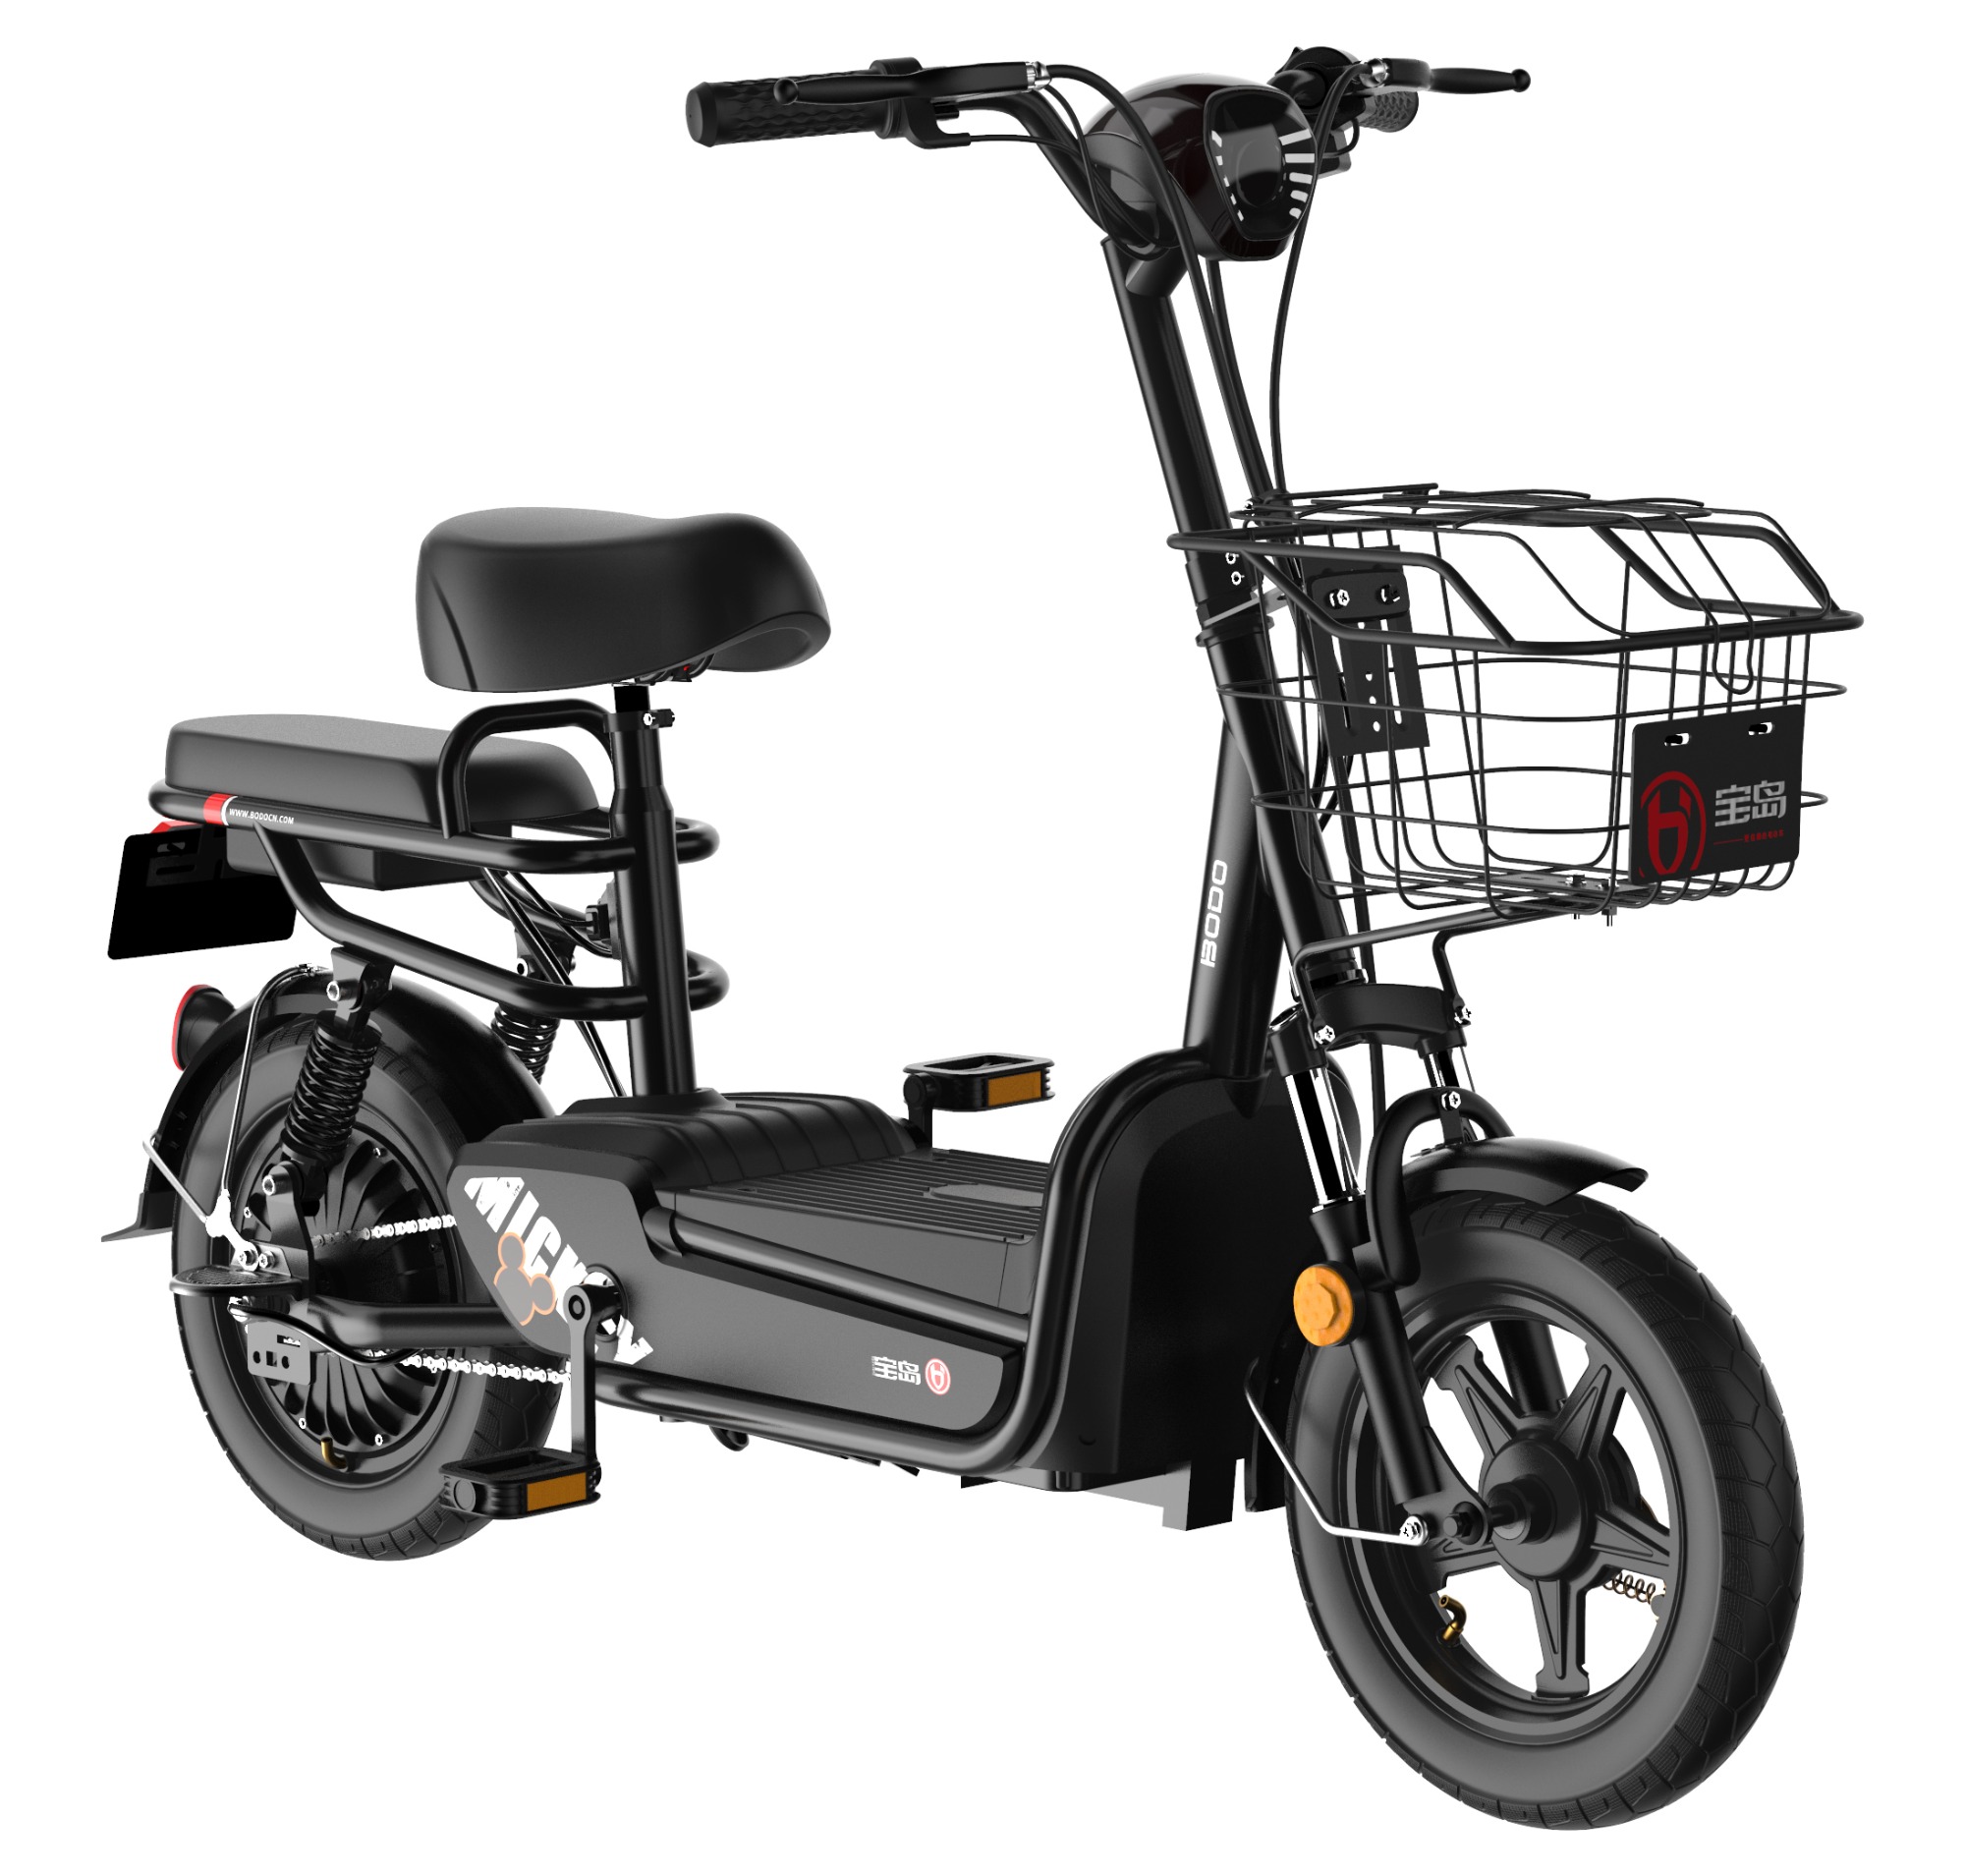 buy electric bike online